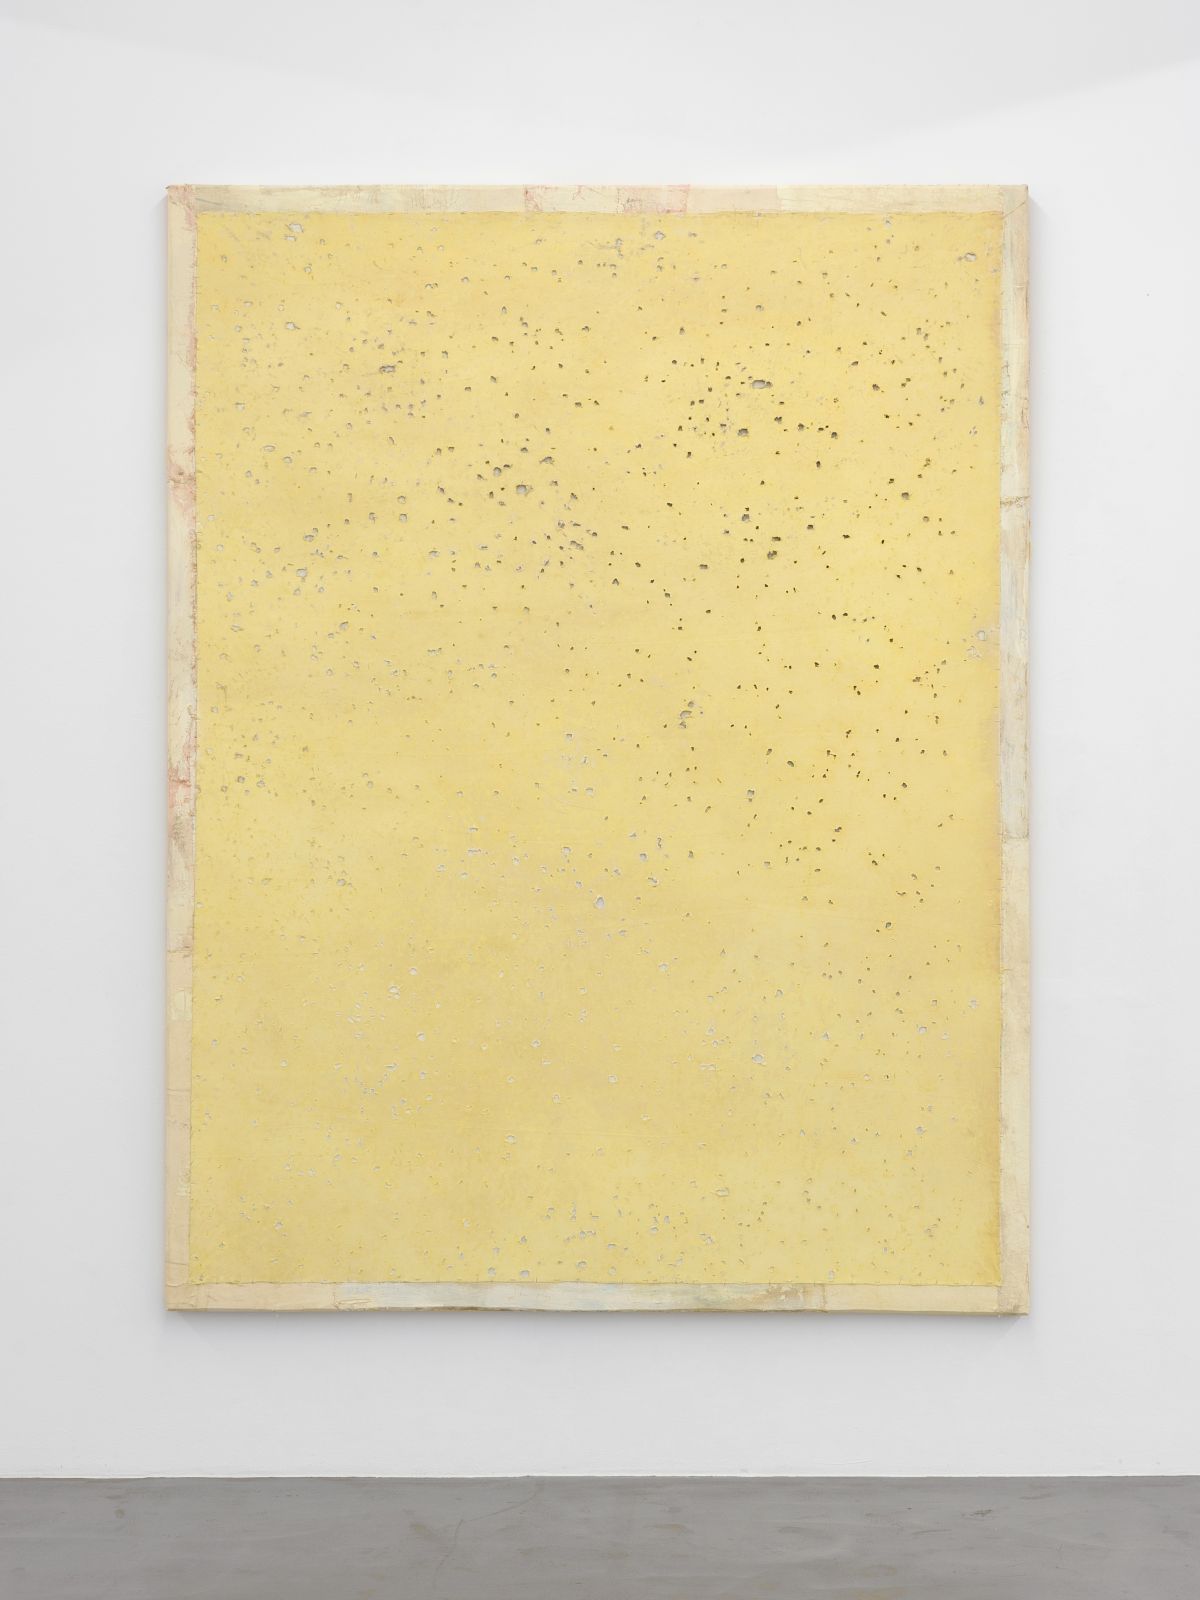 Lawrence Carroll, ‘Untitled (yellow painting)’, 2017, Öl, Wachs, Heftklammern, Wandfarbe, Staub, Leinwand auf Holz